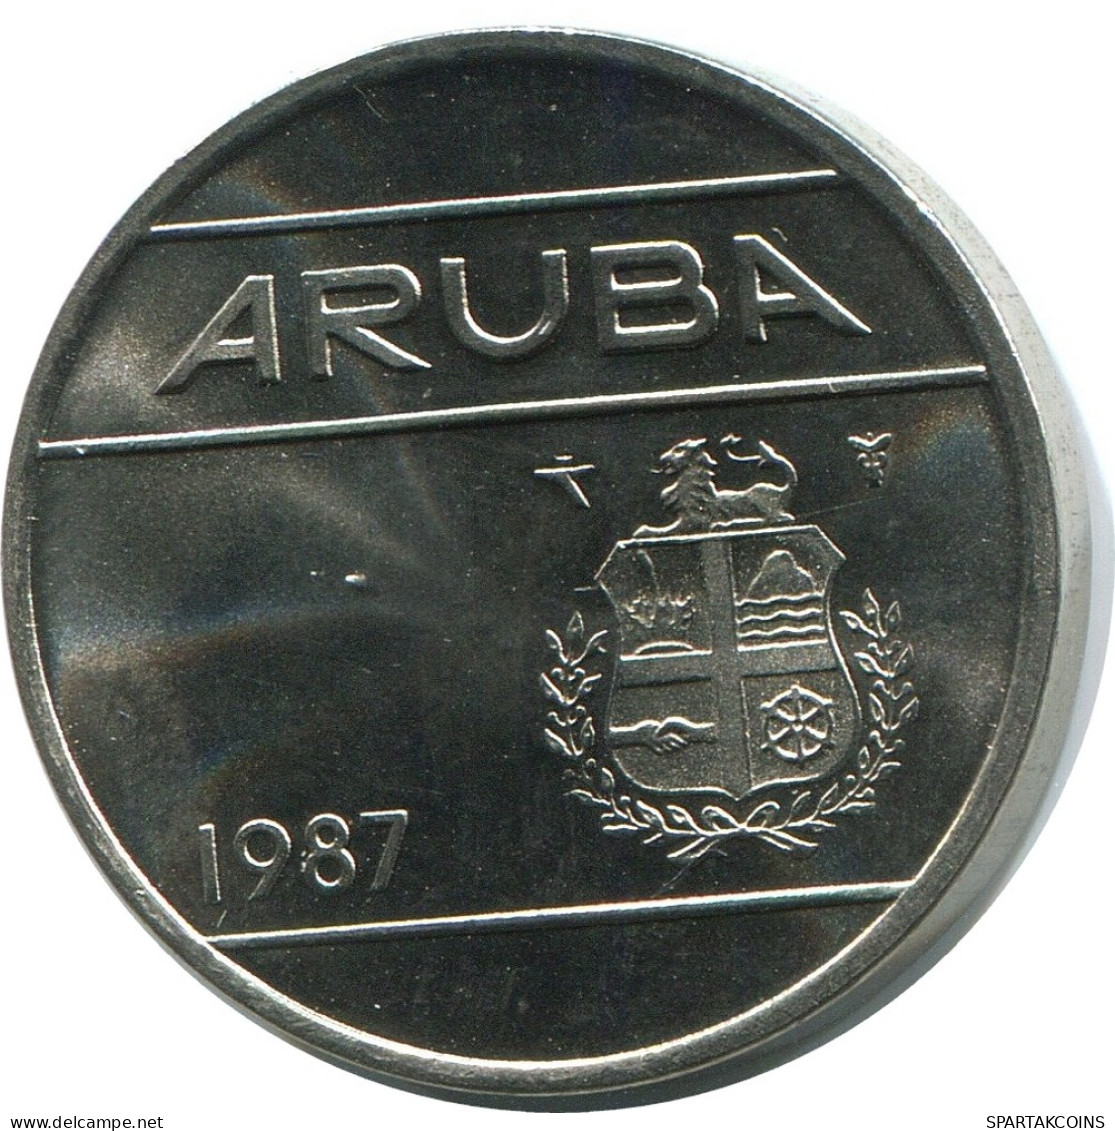 25 CENTS 1987 ARUBA Coin (From BU Mint Set) #AH067.U - Aruba